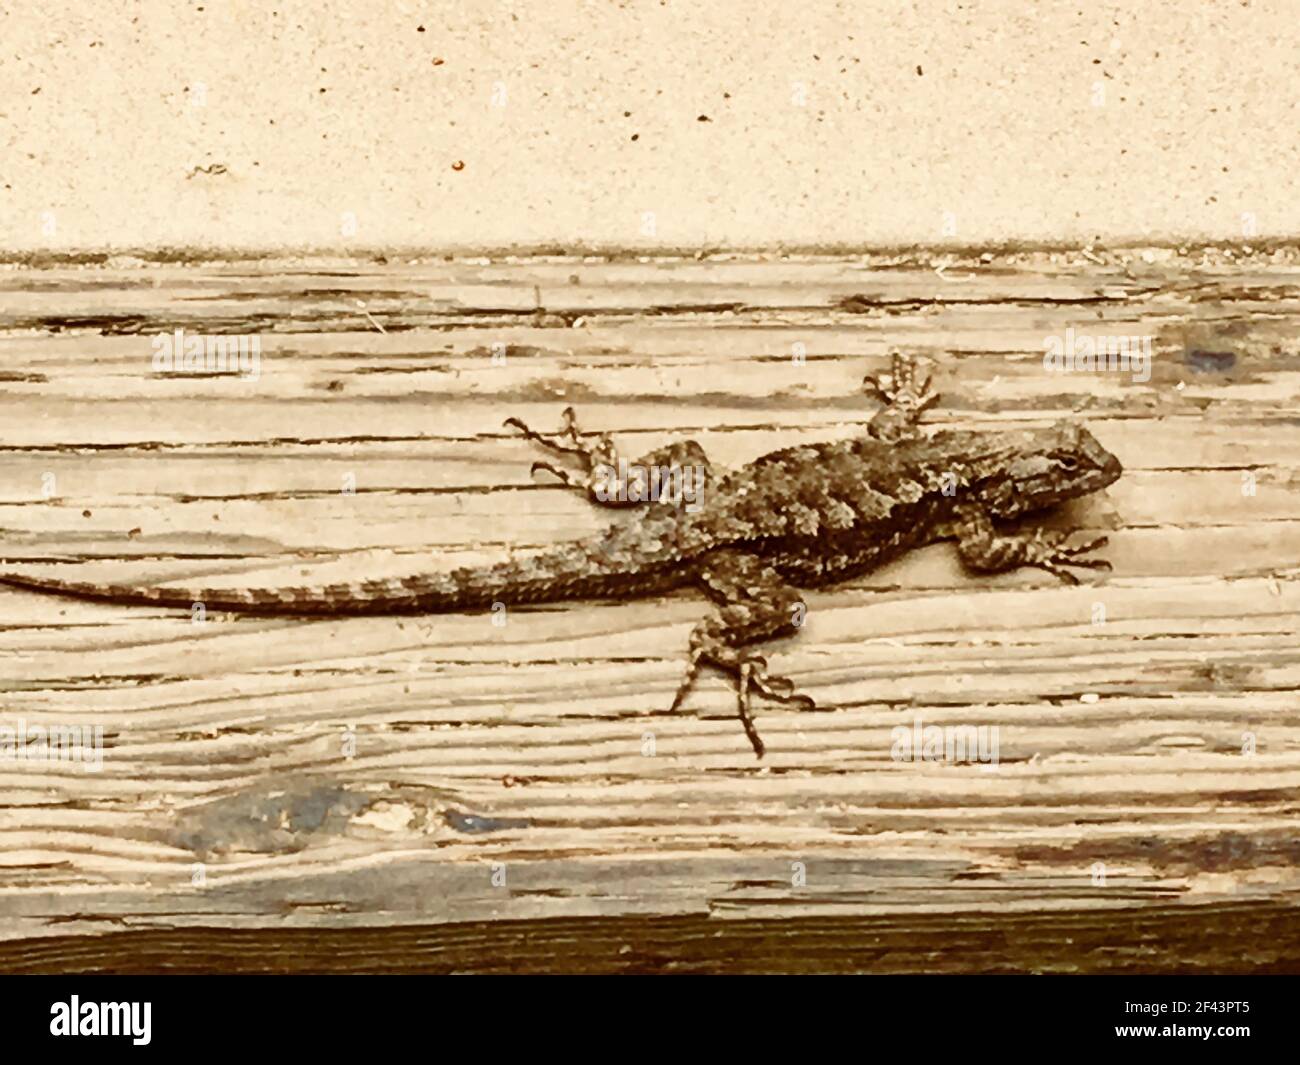 Sepia toned portrait of California Alligator Lizard on wooden post Stock Photo